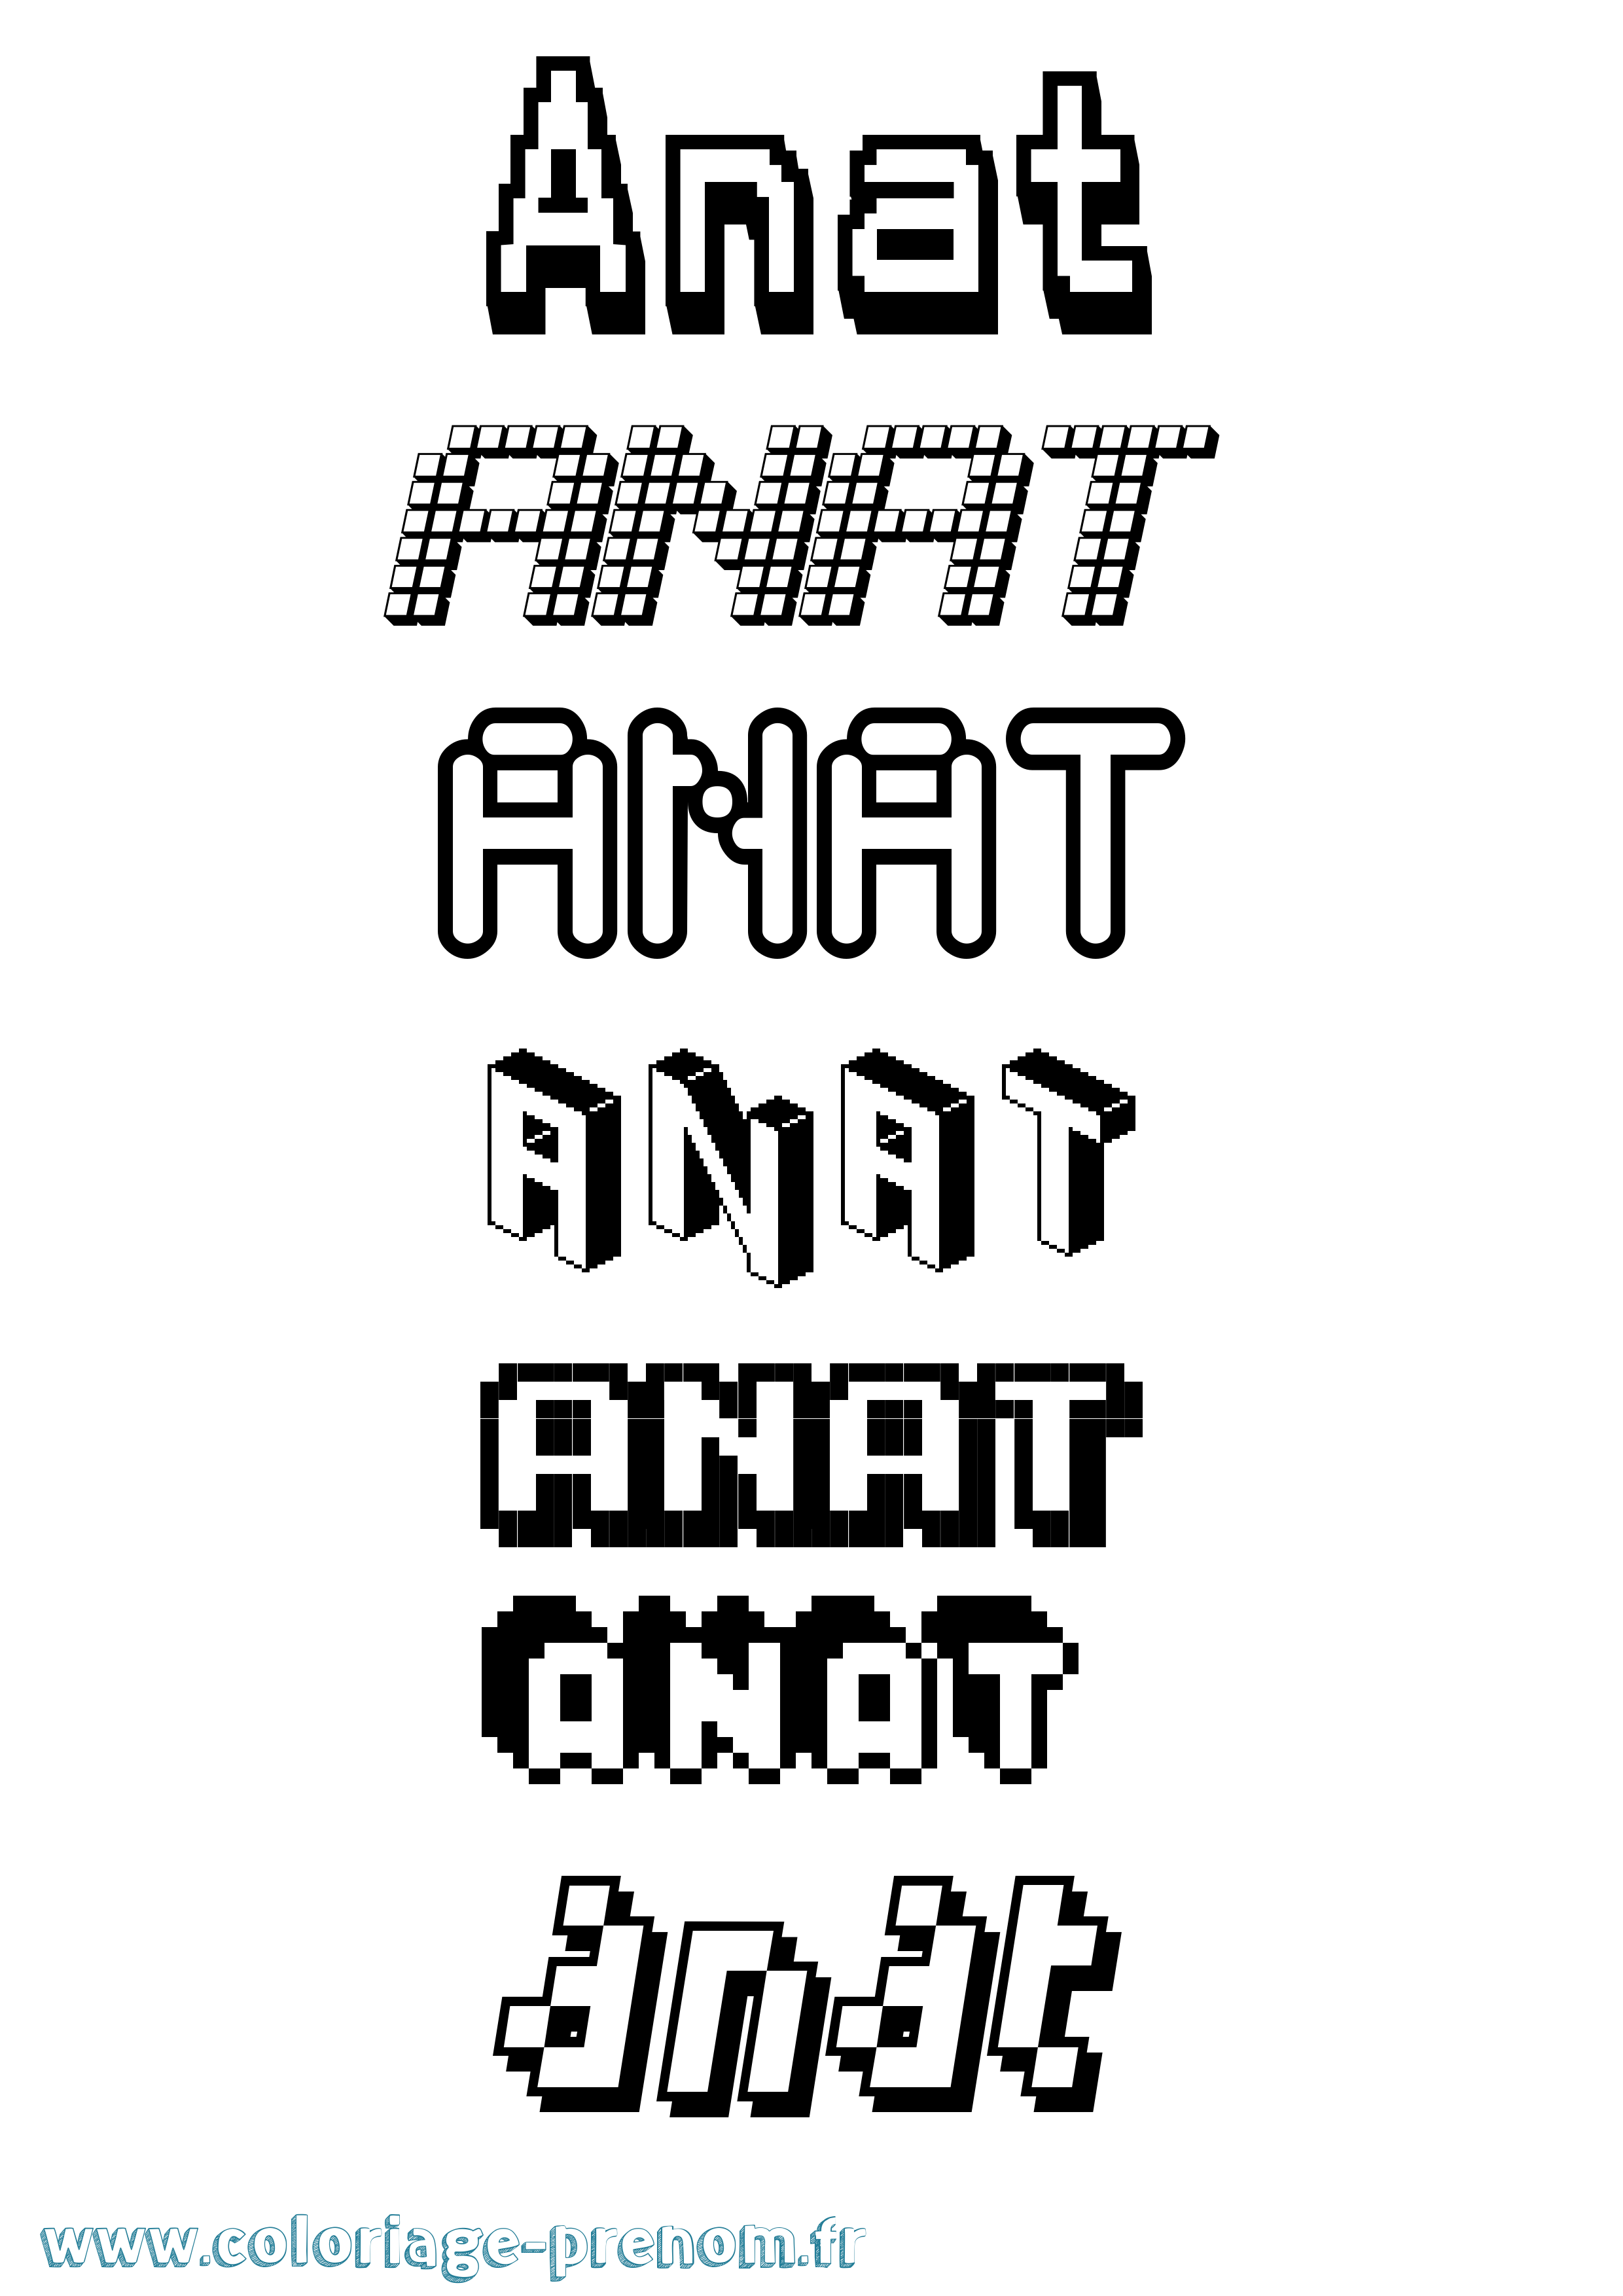 Coloriage prénom Anat Pixel